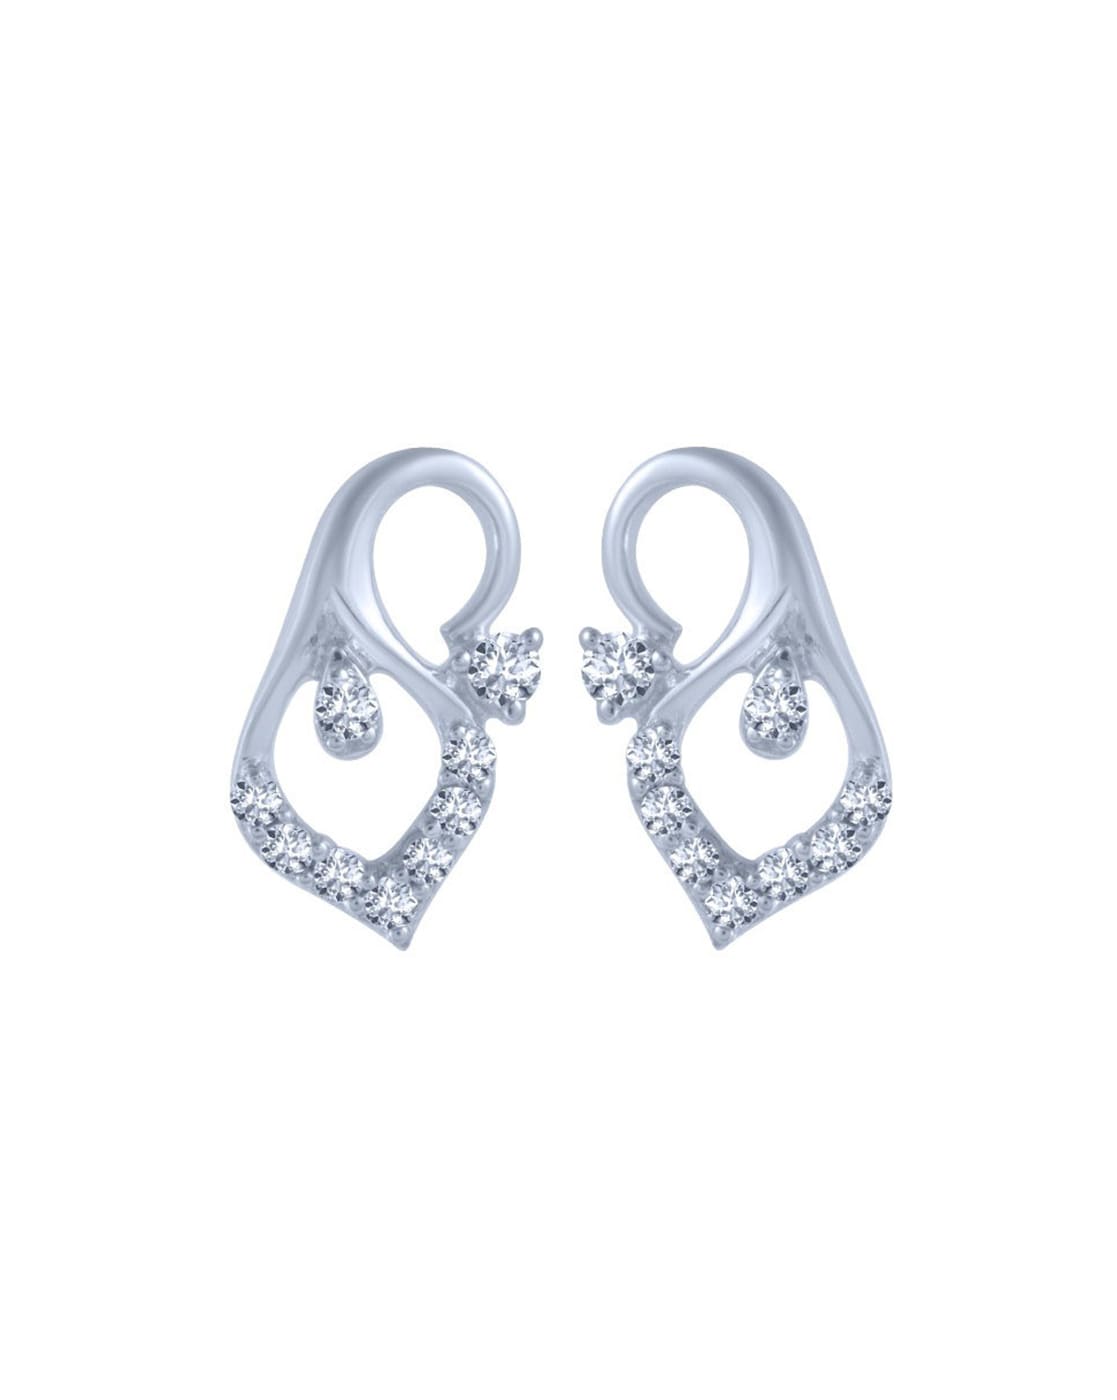 Buy Platinum Earrings Online  BlueStonecom  Indias 1 Online Jewellery  Brand